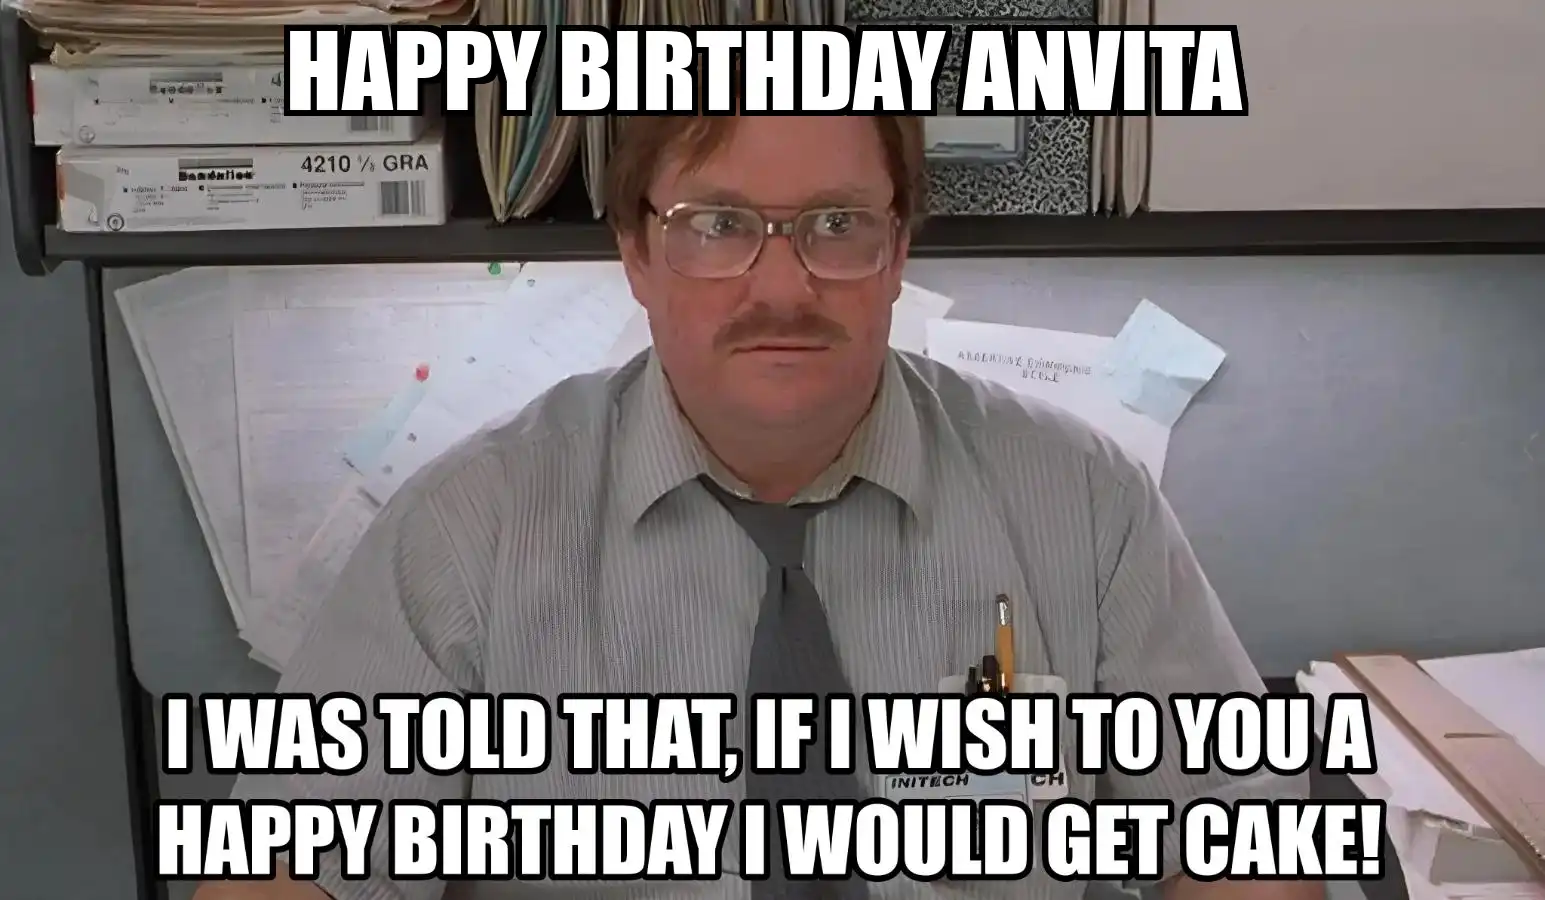 Happy Birthday Anvita I Would Get A Cake Meme